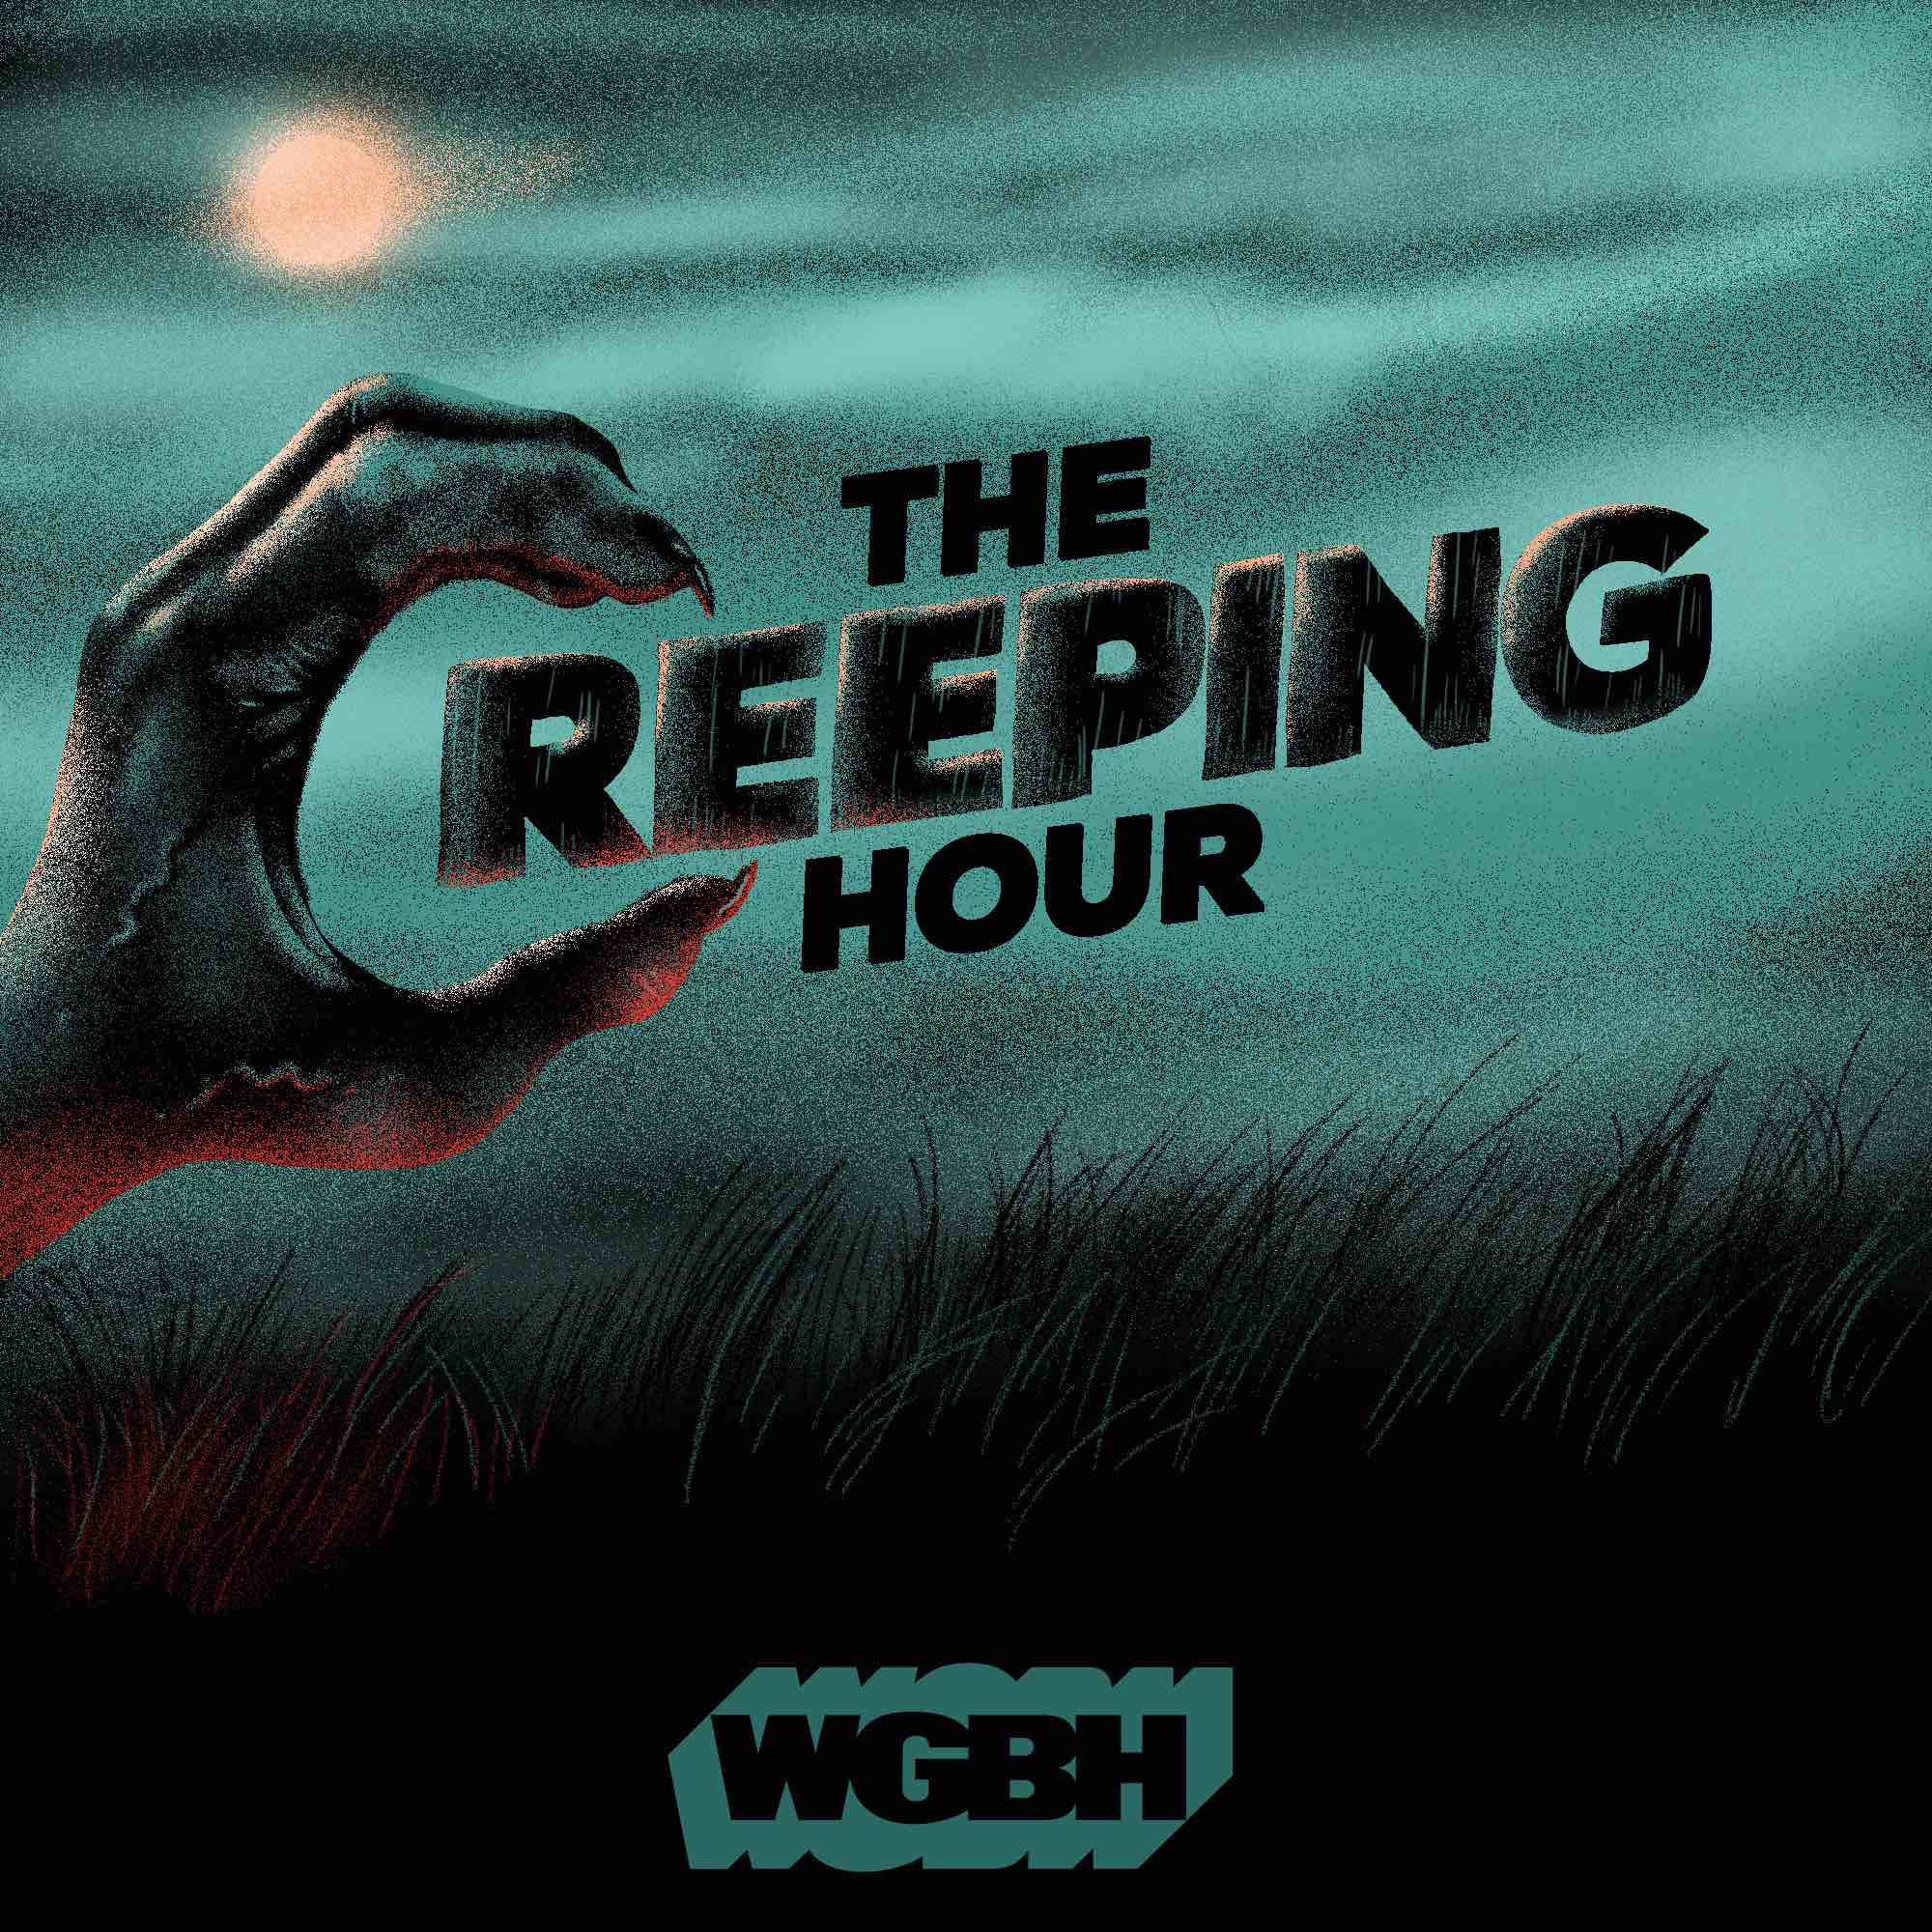 The Creeping Hour podcast show image